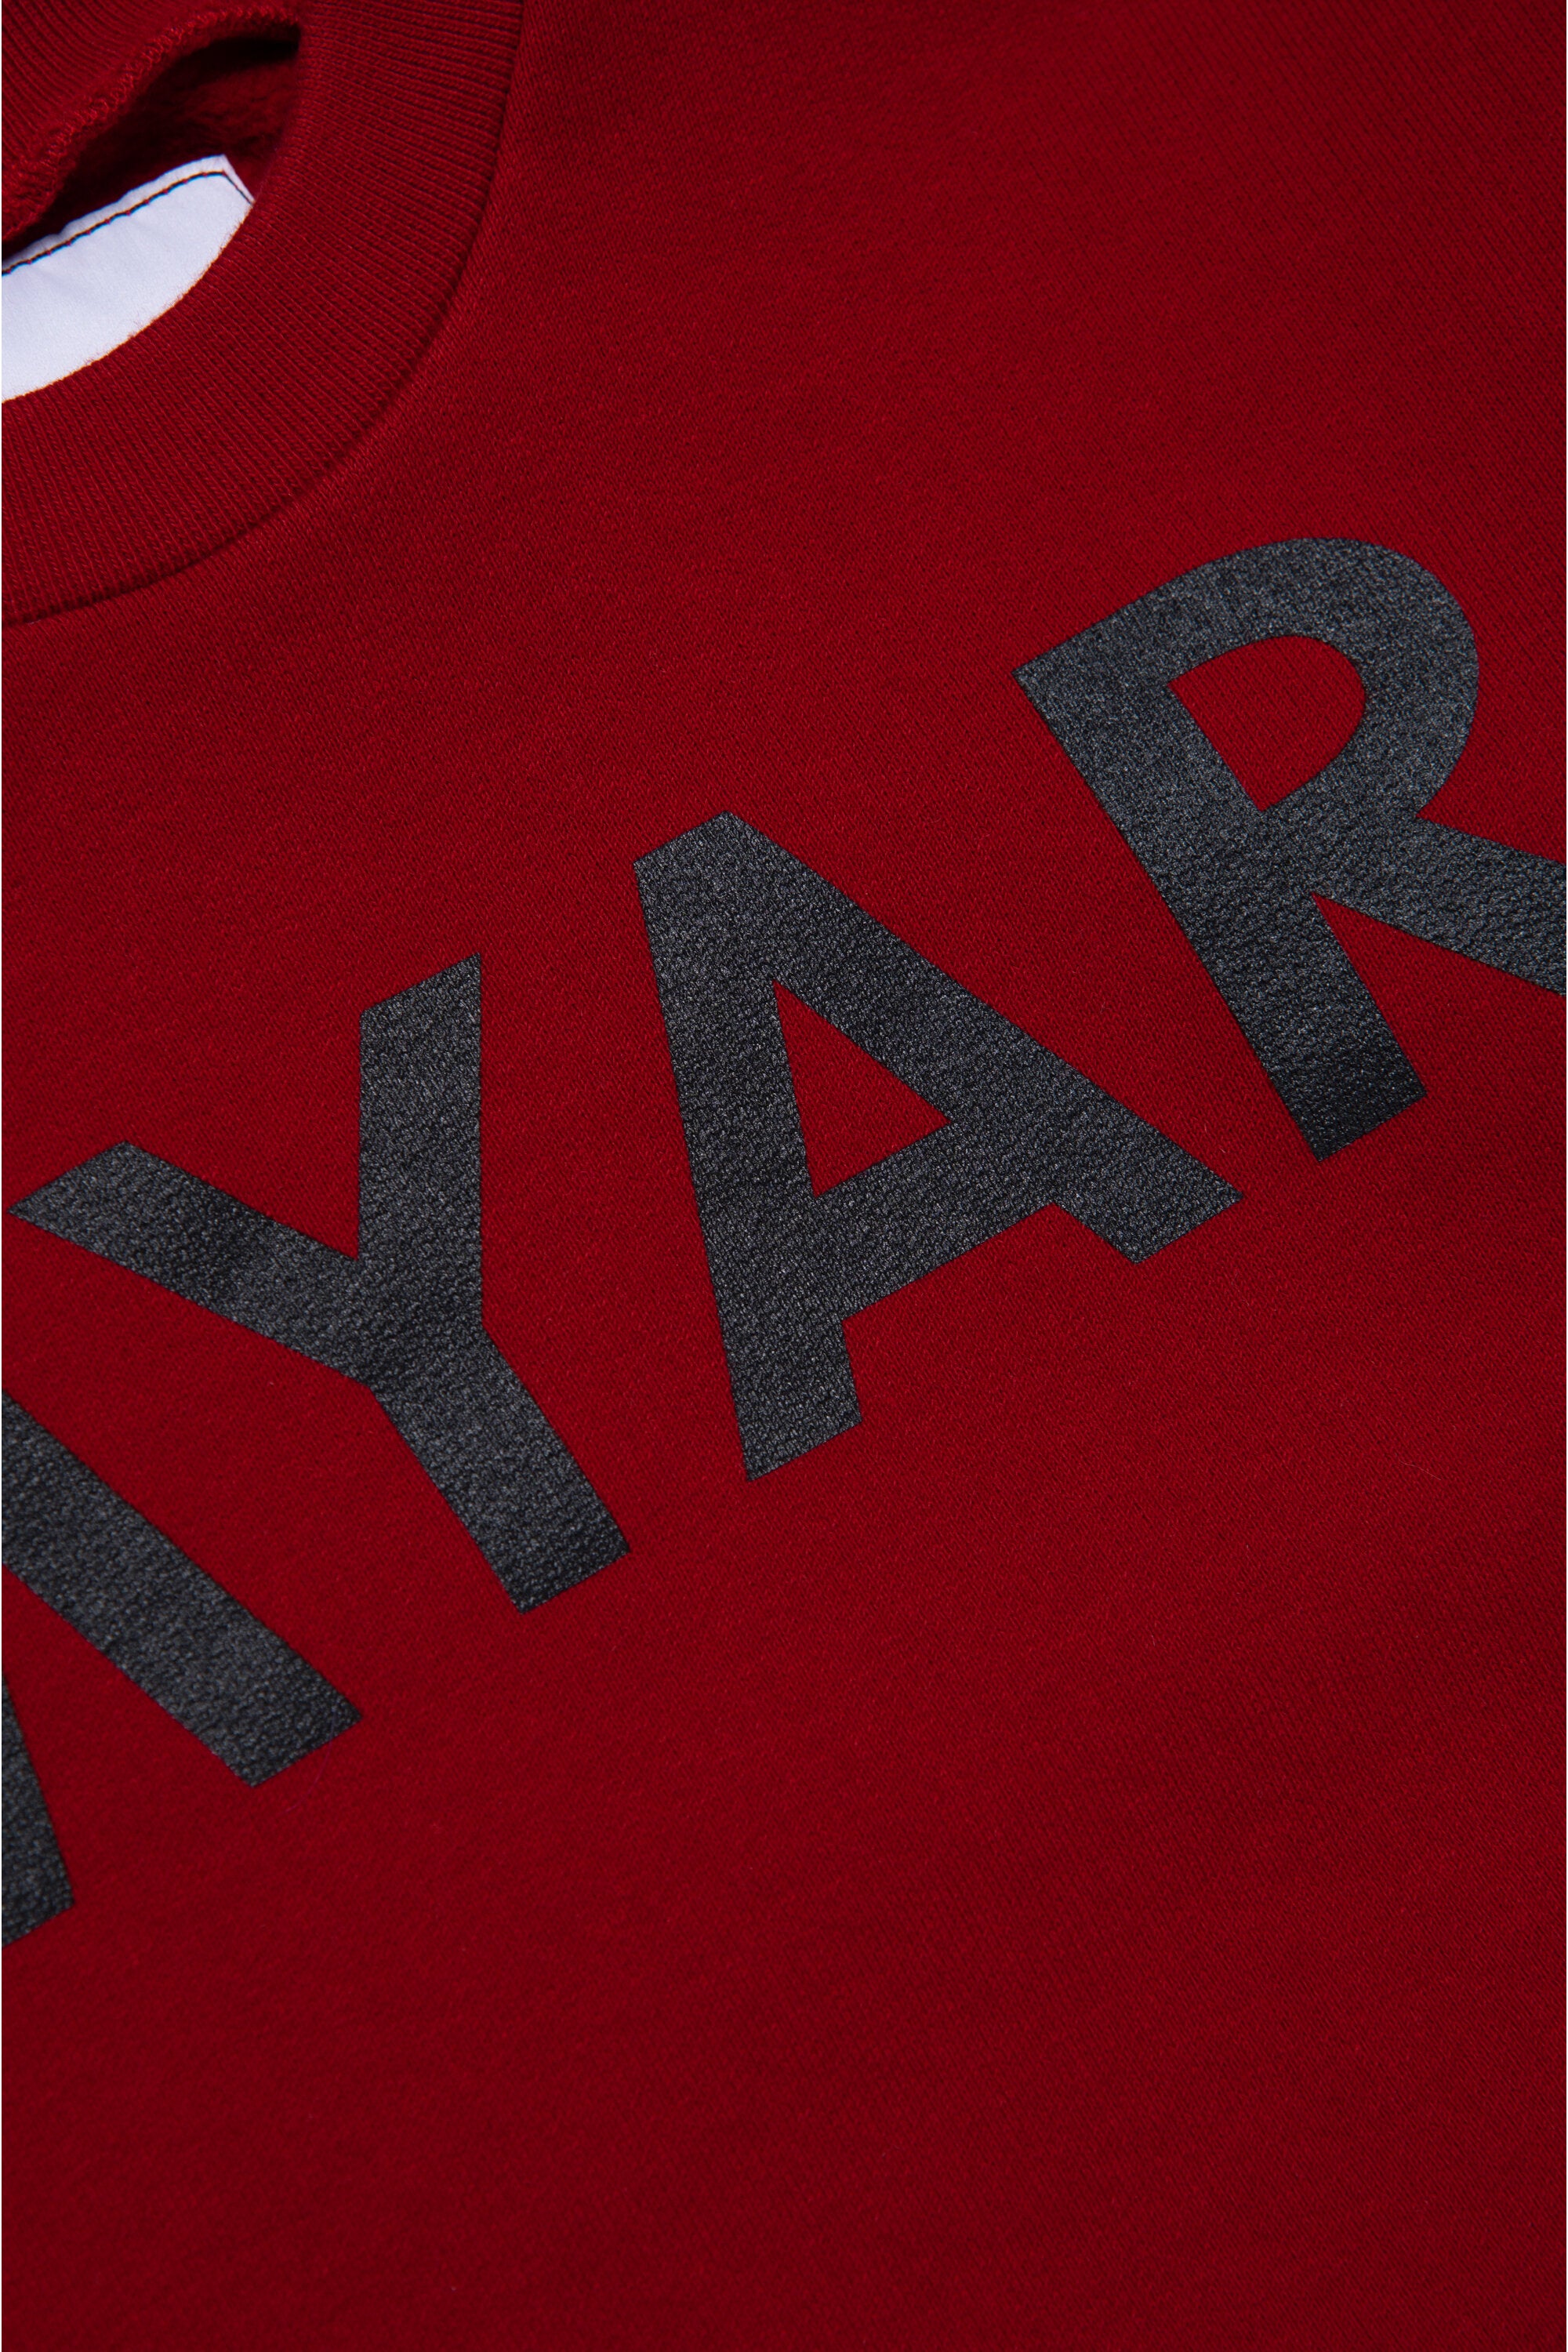 Deadstock fabric sweatshirt with MYAR logo